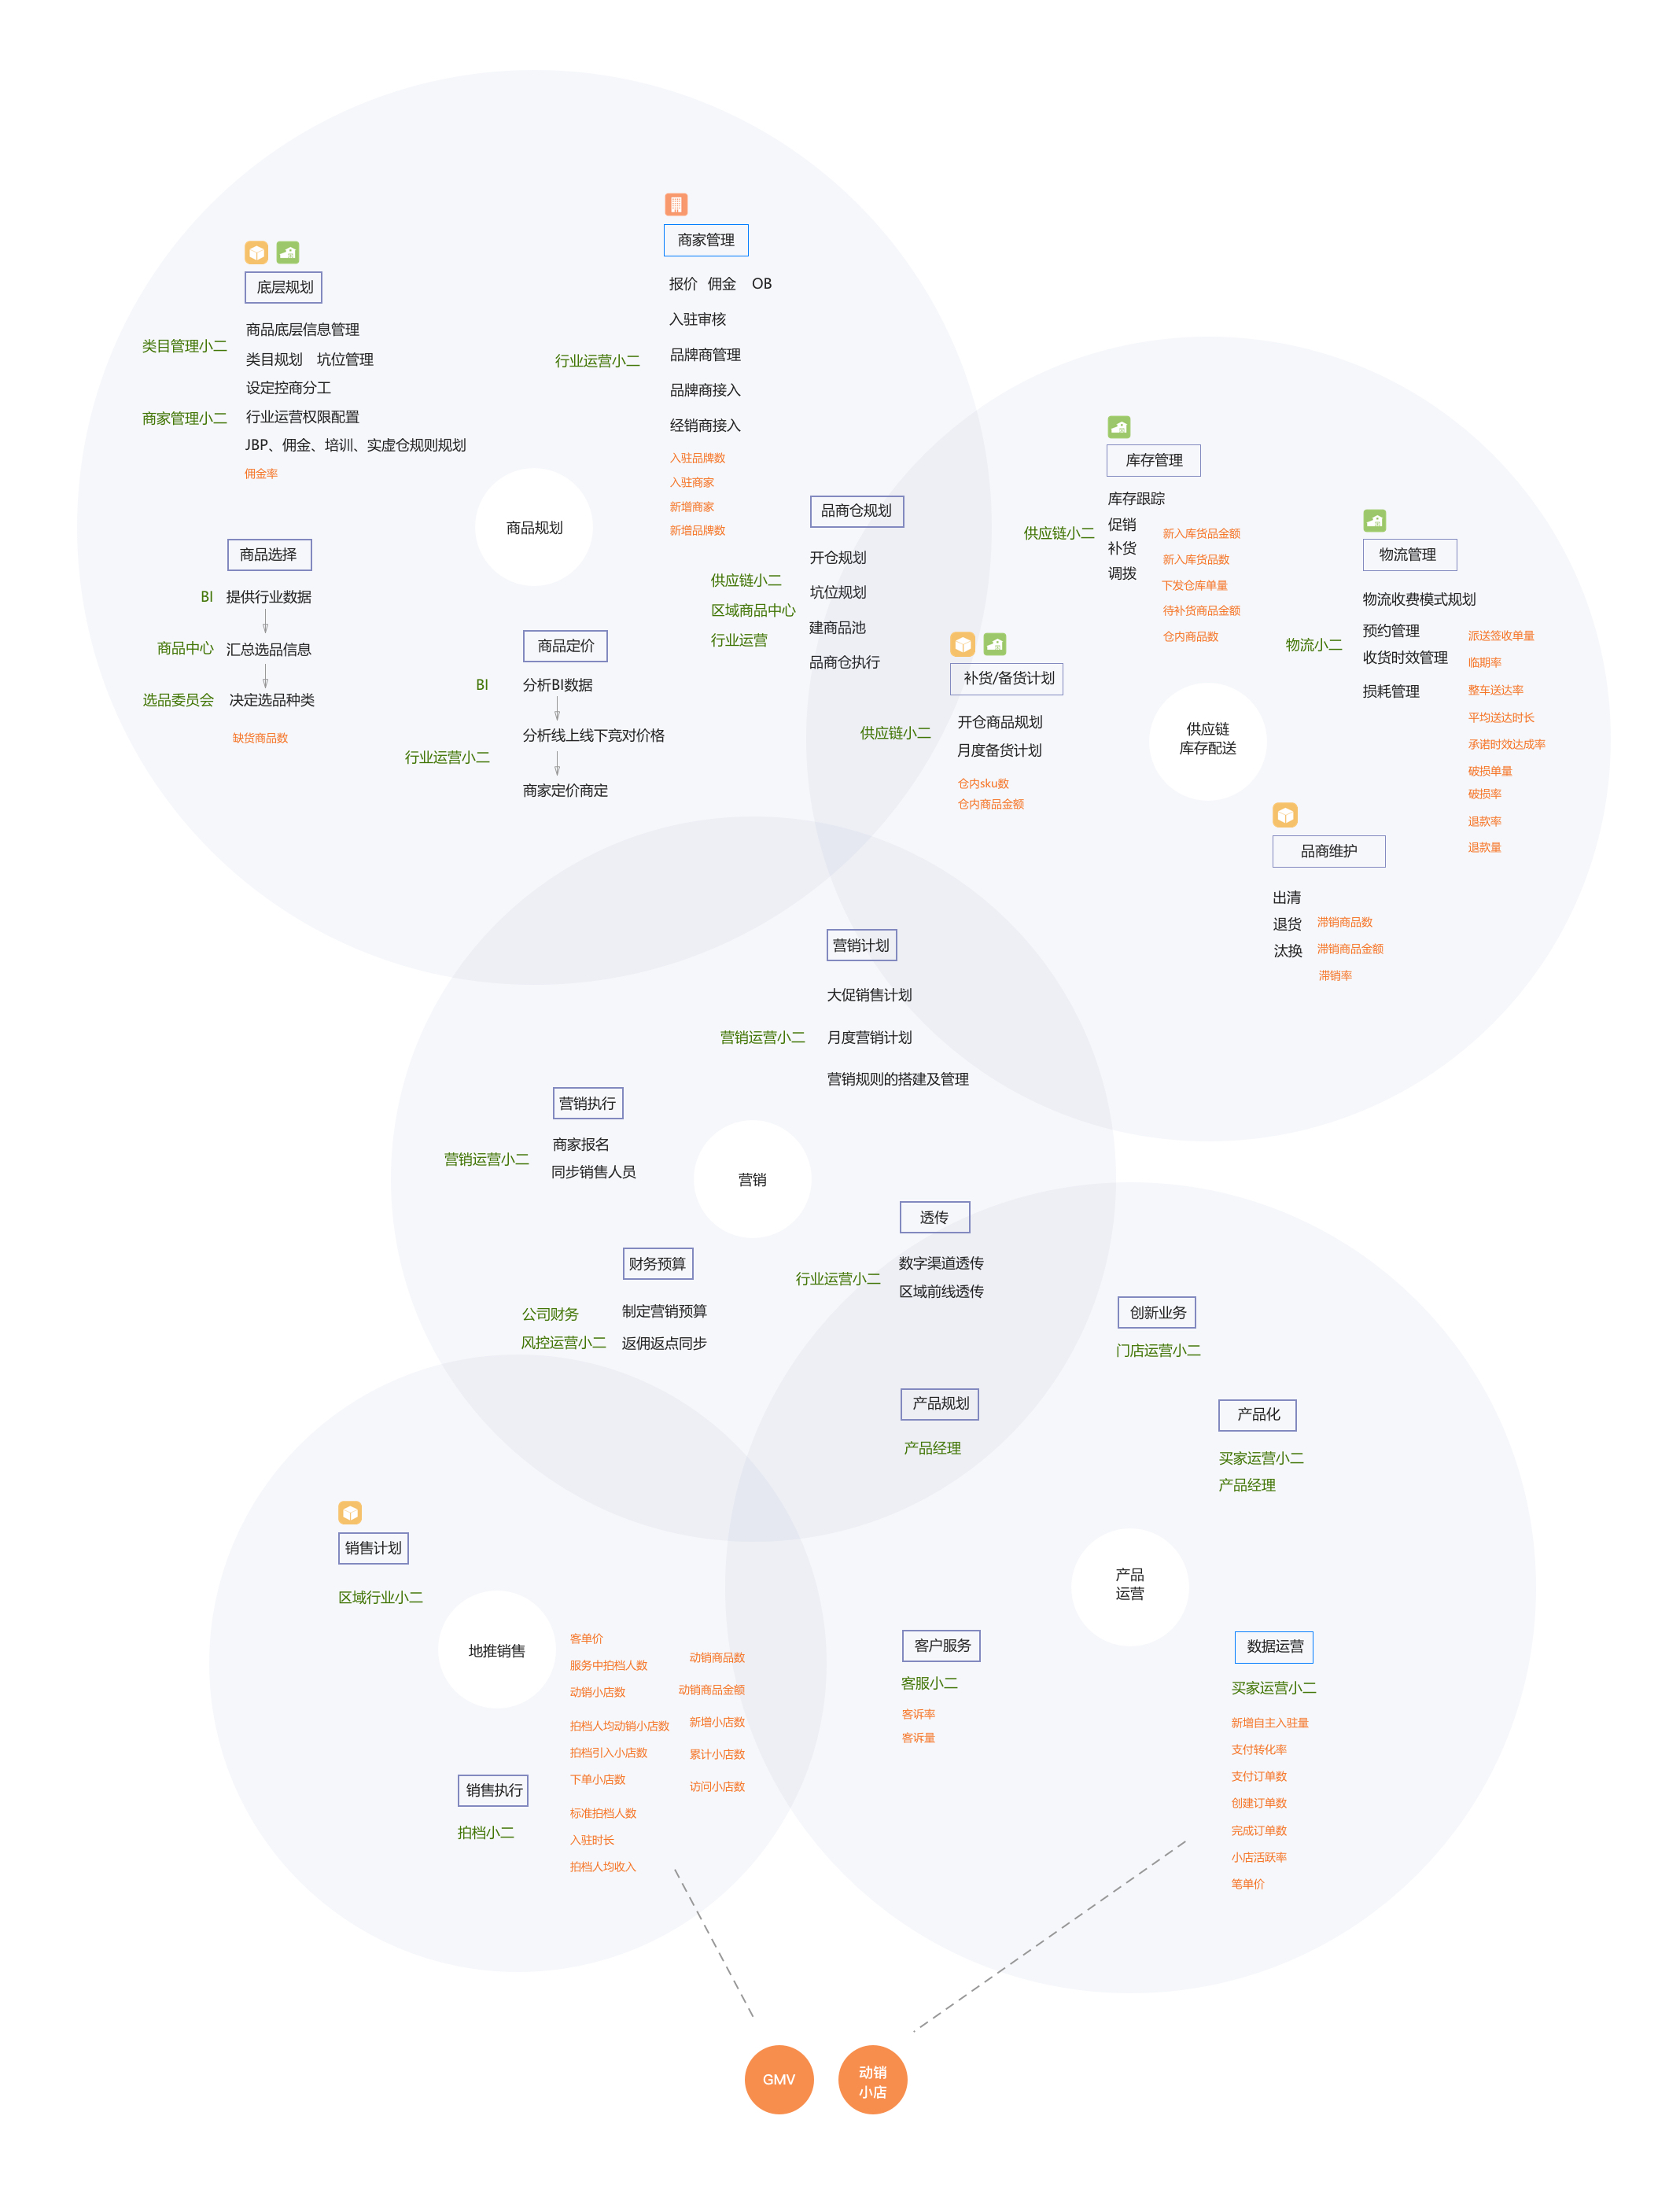 HAWK 供应链工作台设计语言及开发框架整体方案 - 图8